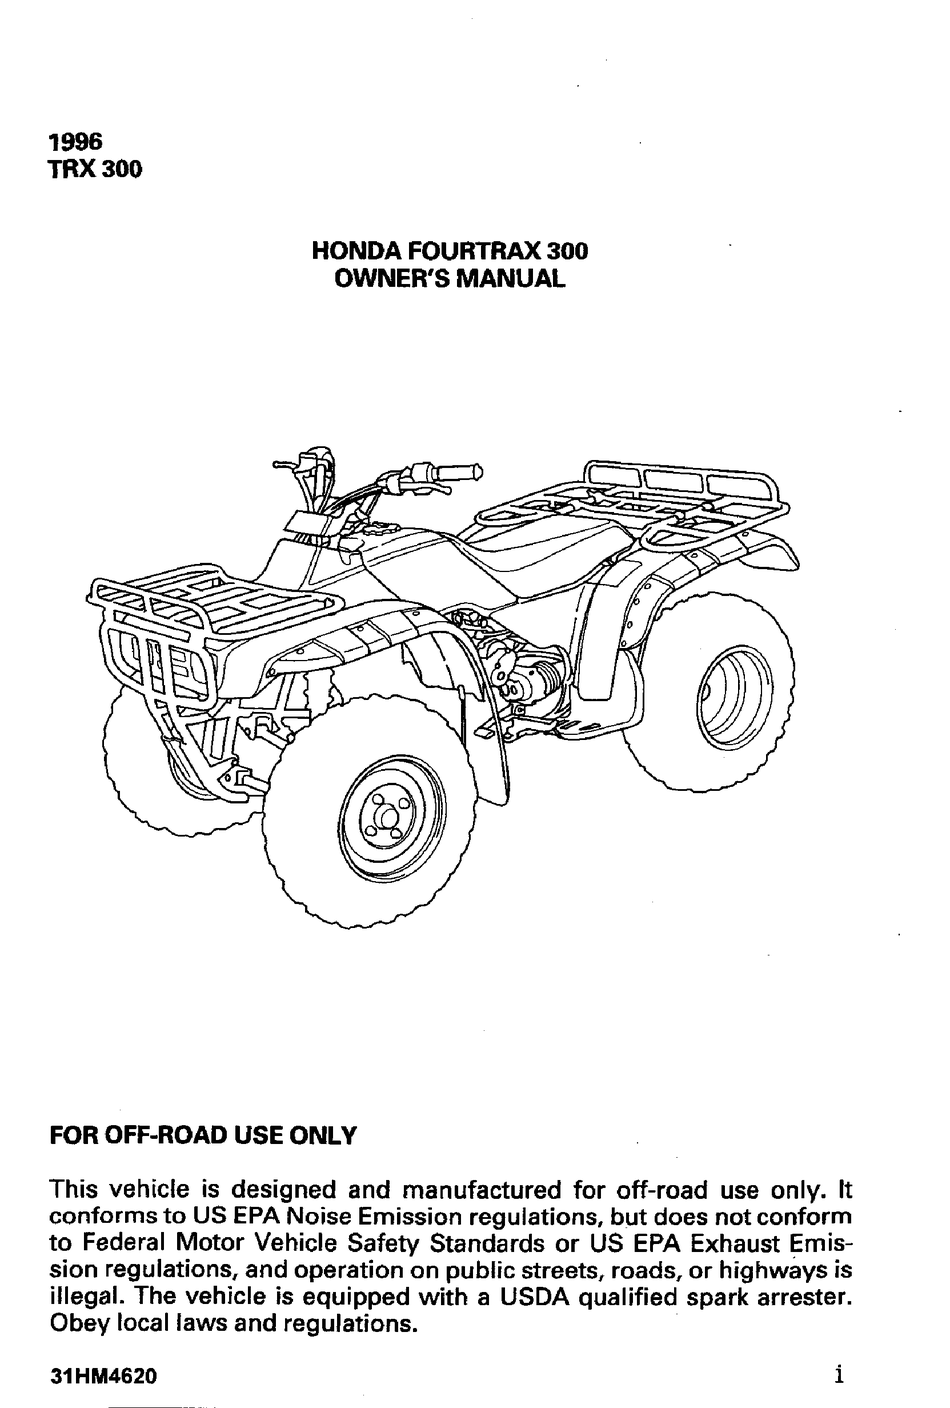 1988 honda fourtrax 300 service manual pdf download cat goes fishing free download